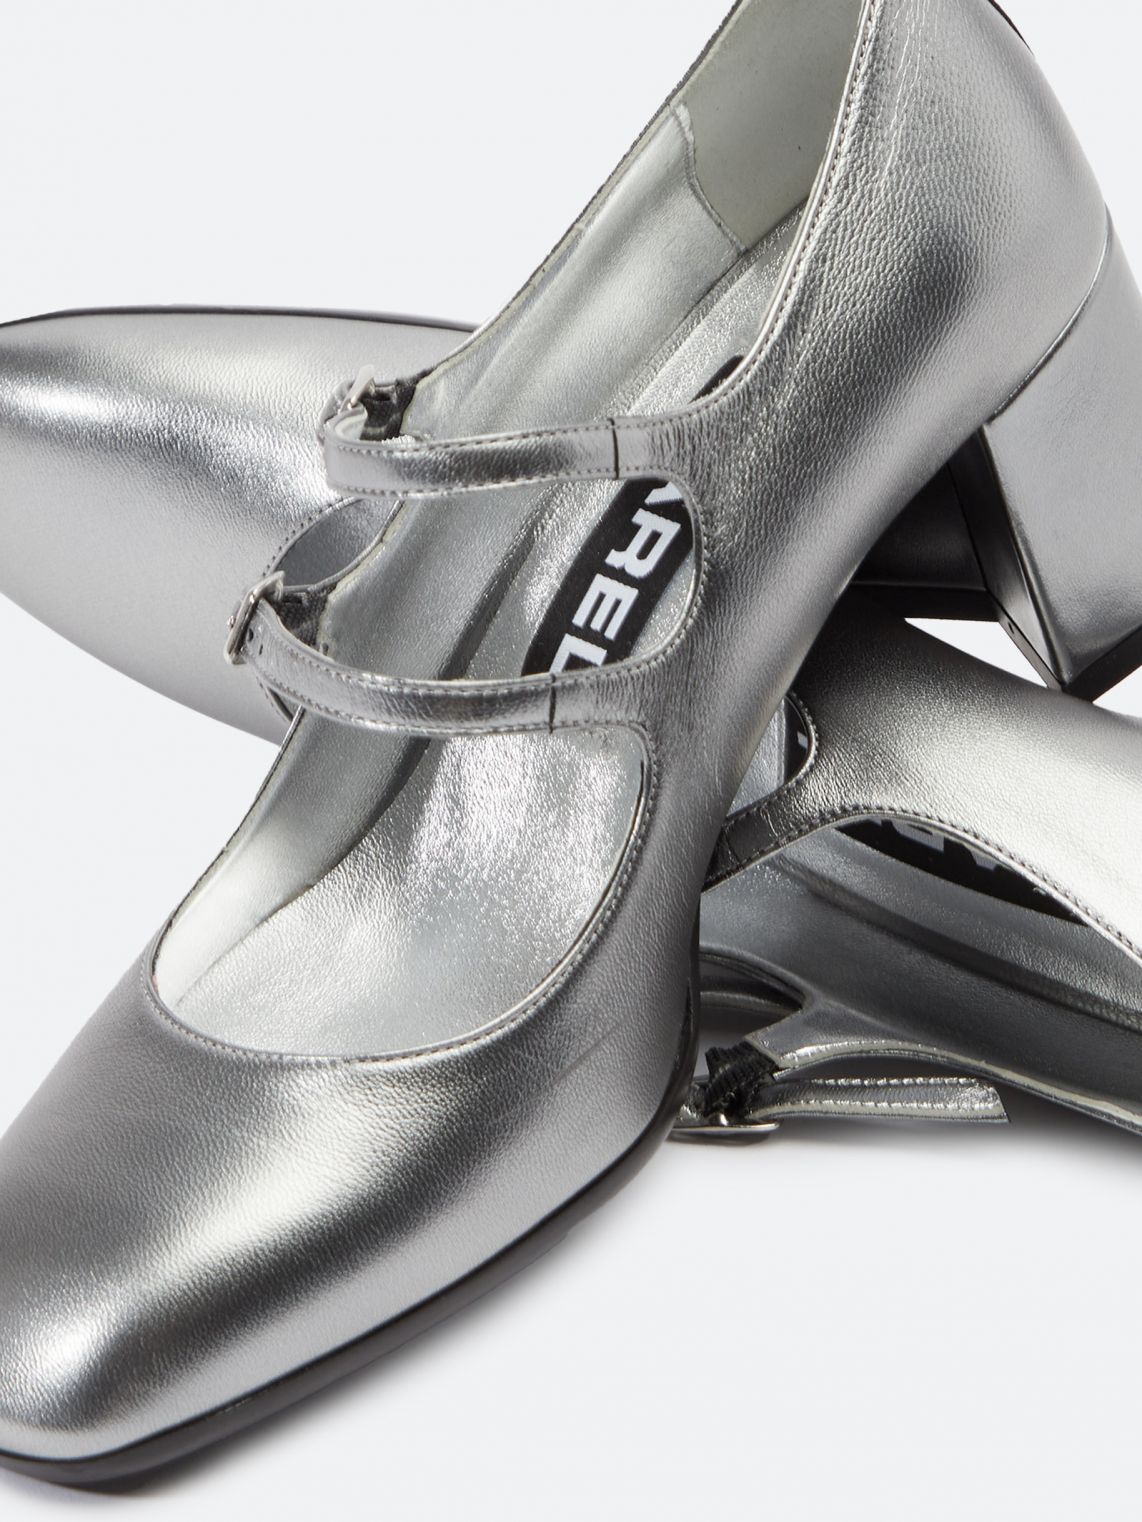 ALICE gunmetal grey leather Mary Janes | Carel Paris Shoes